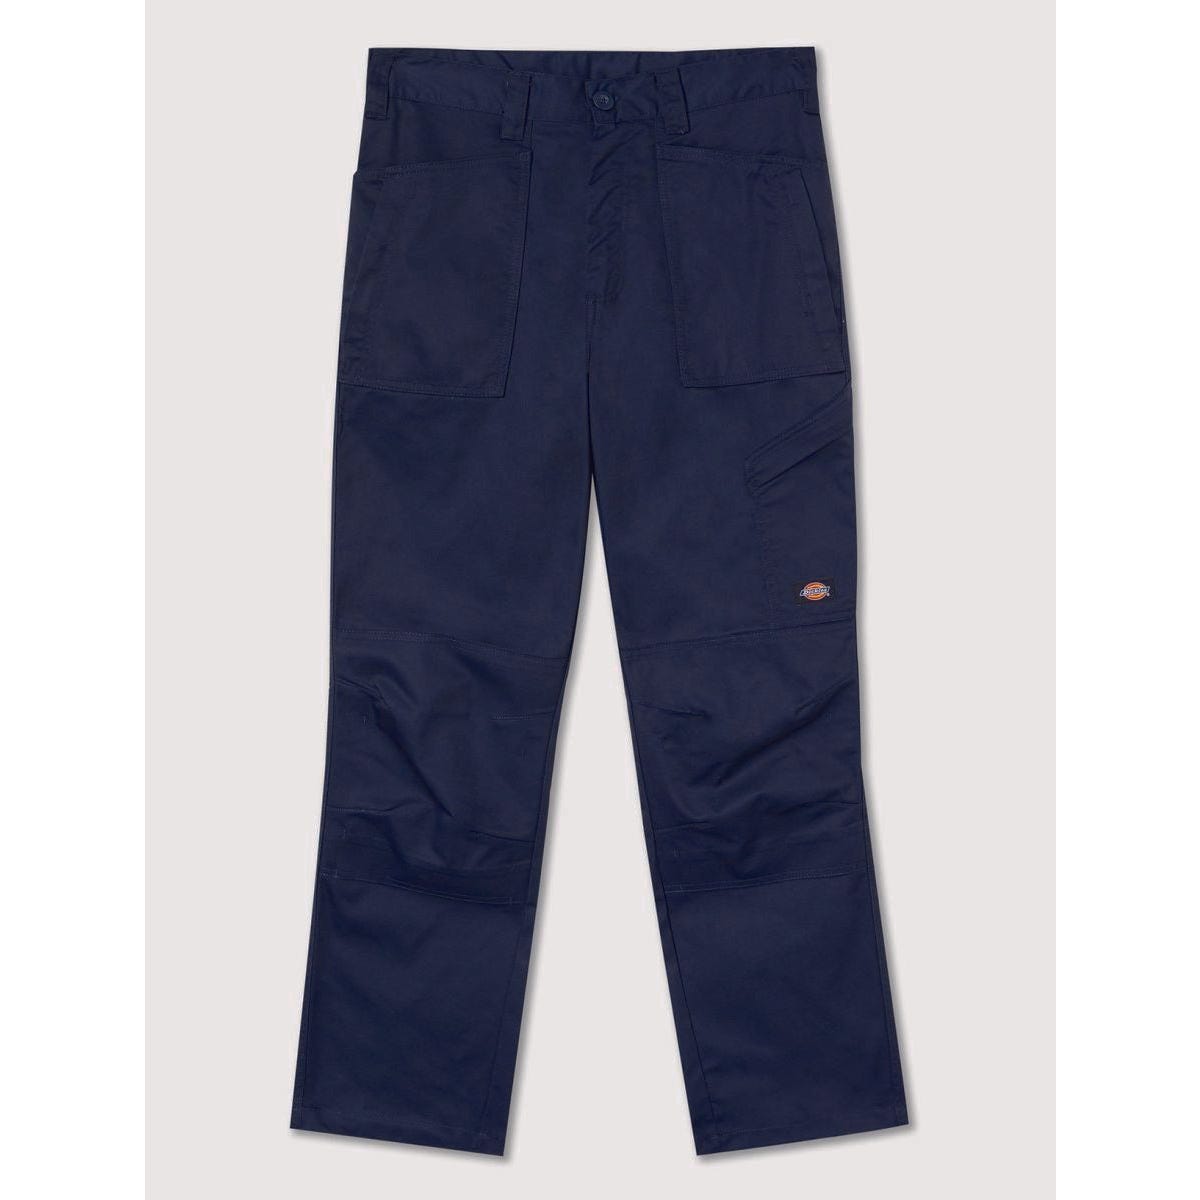 Pantalon de travail Action Flex bleu marine - Dickies - Taille 38 5